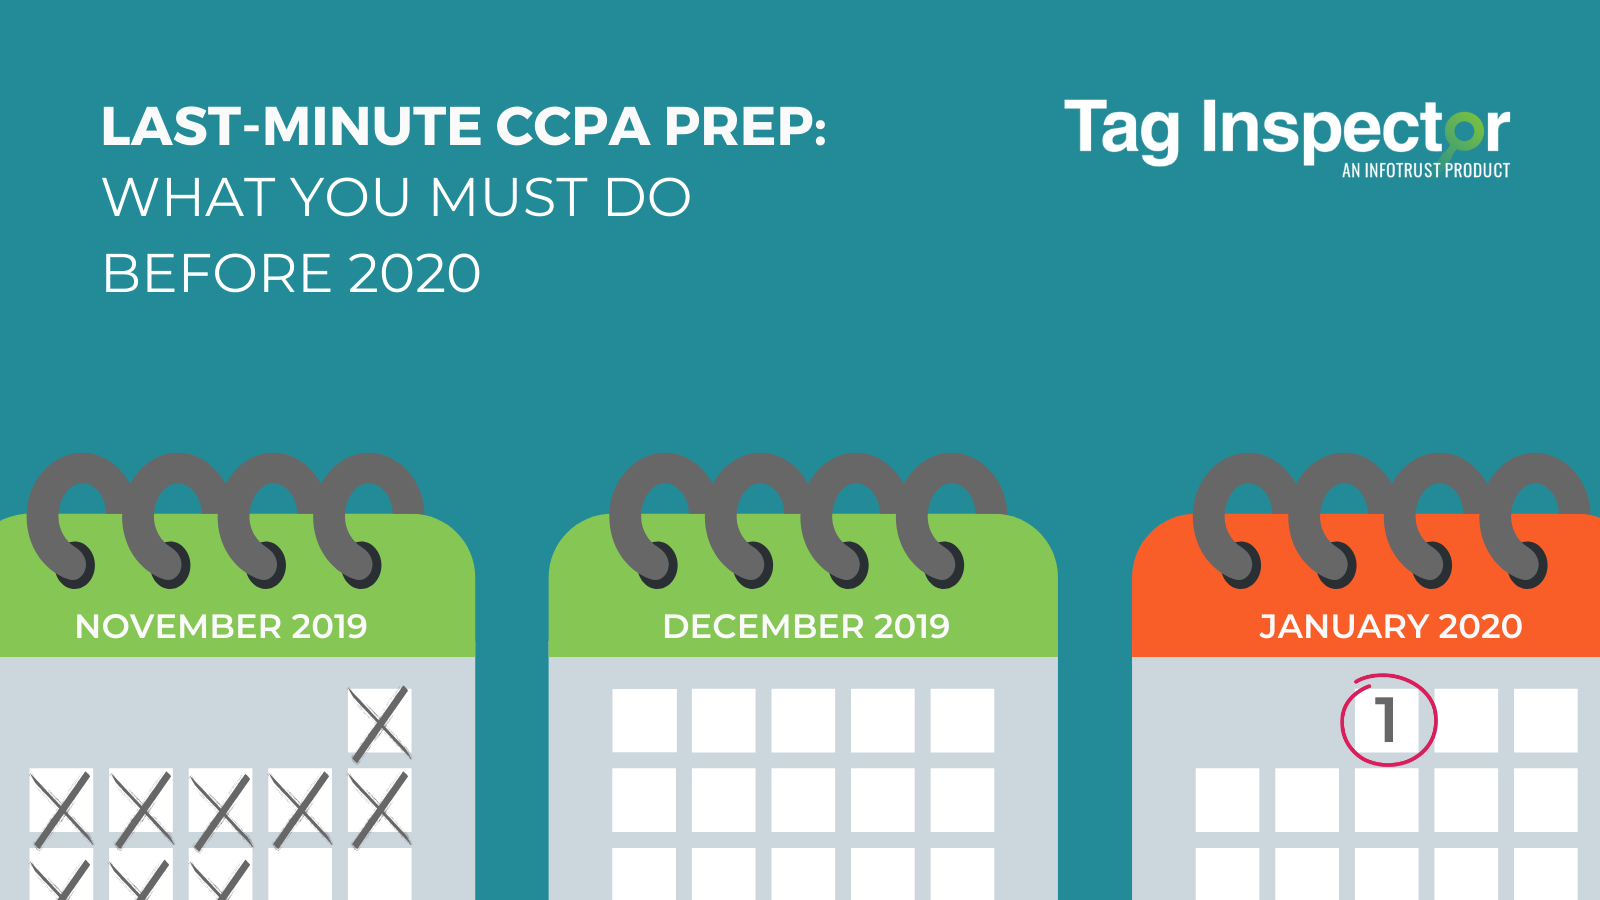 CCPA prep before January 2020